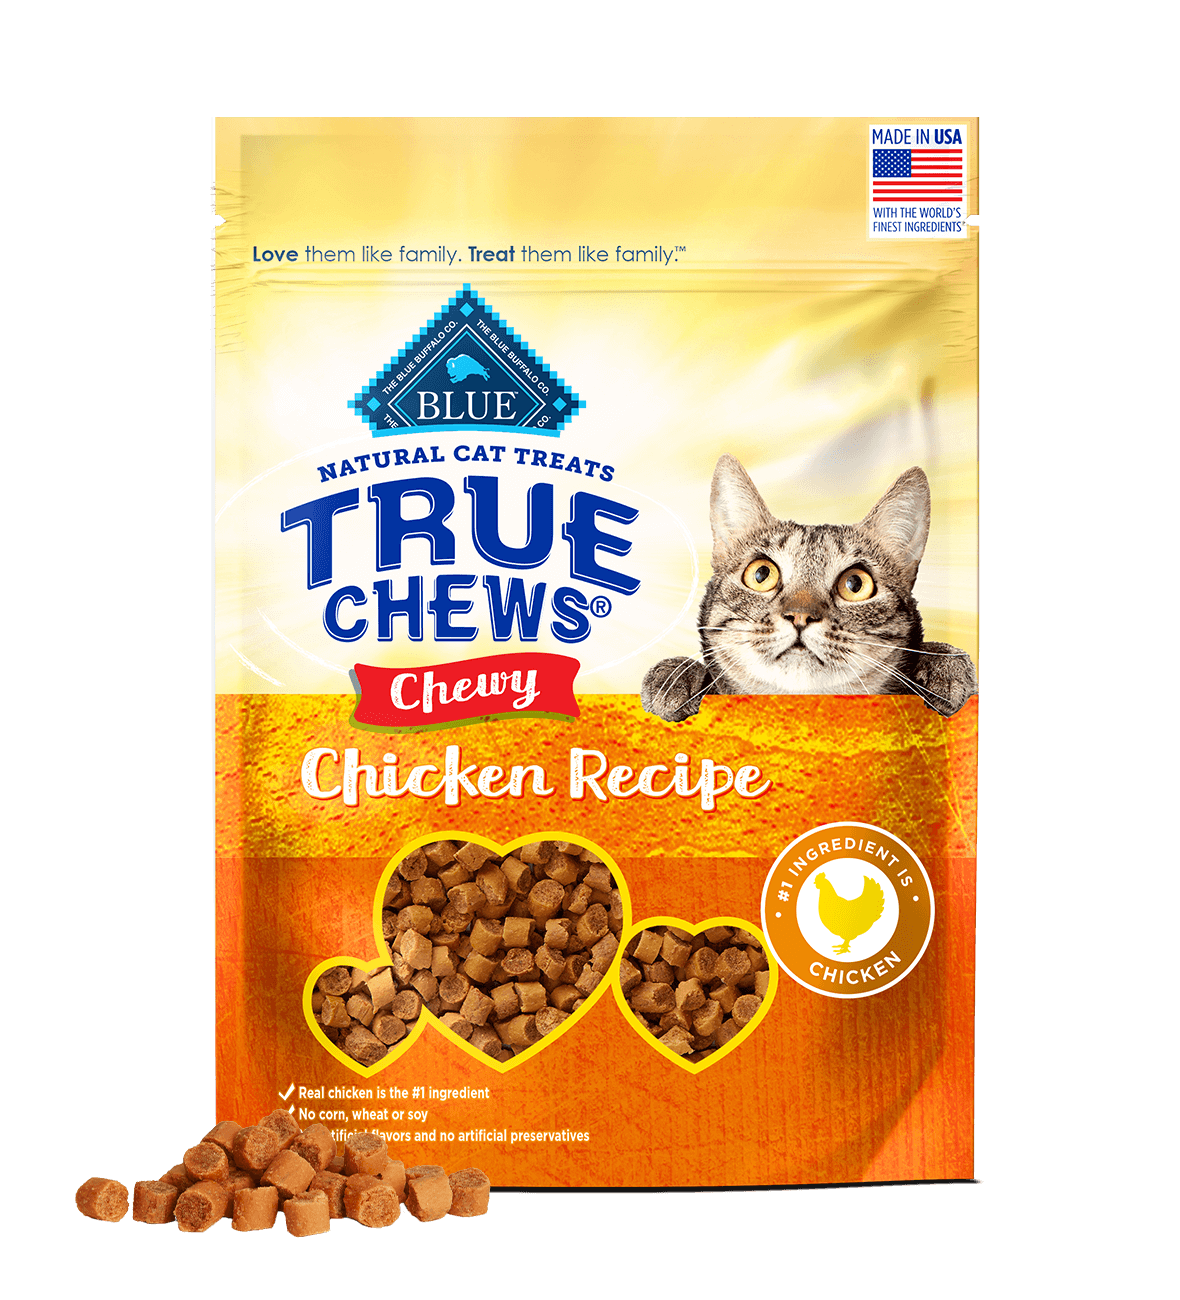 blue true chews ® delicious chicken recipe chewy cat treats cat treats